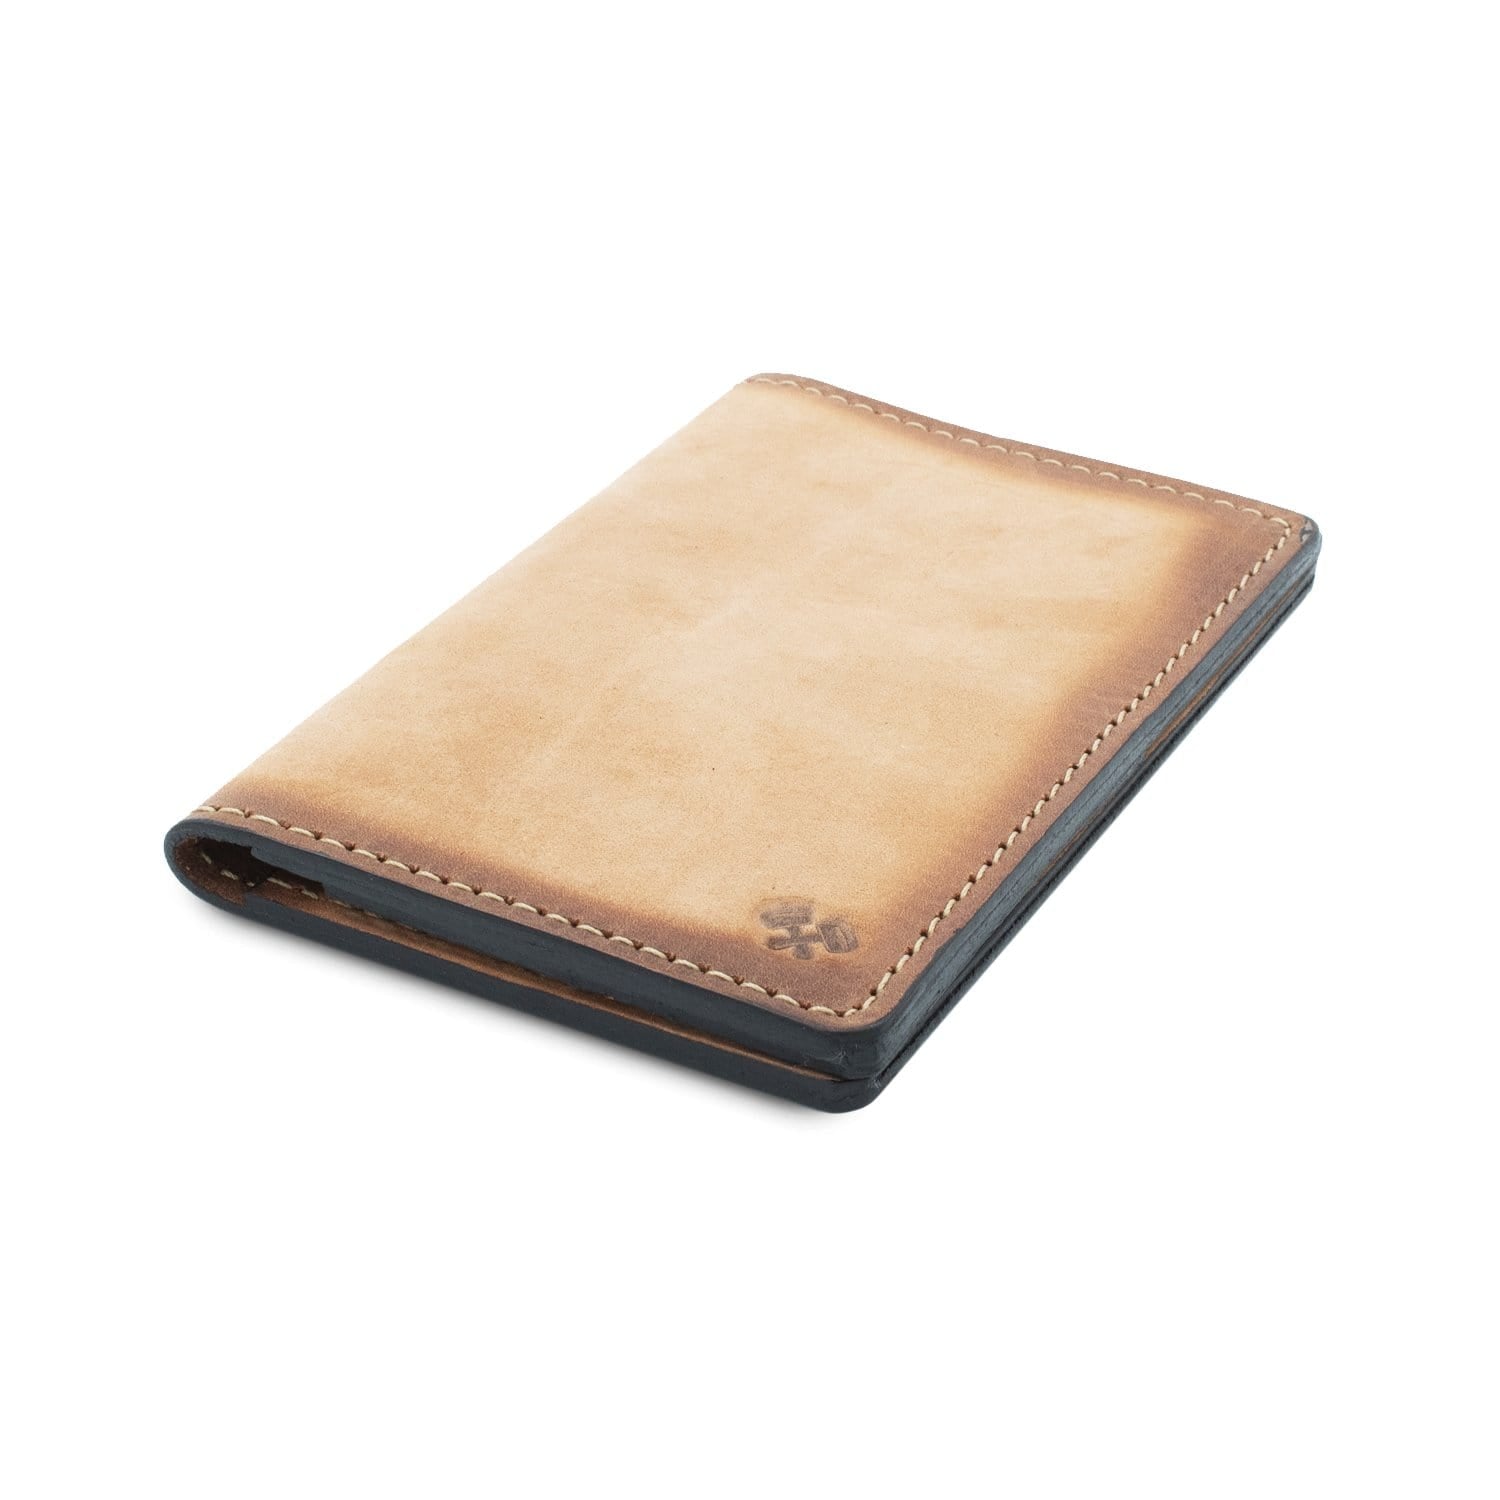 Feel Cork] Wood tone passport holder / passport cover travel gift